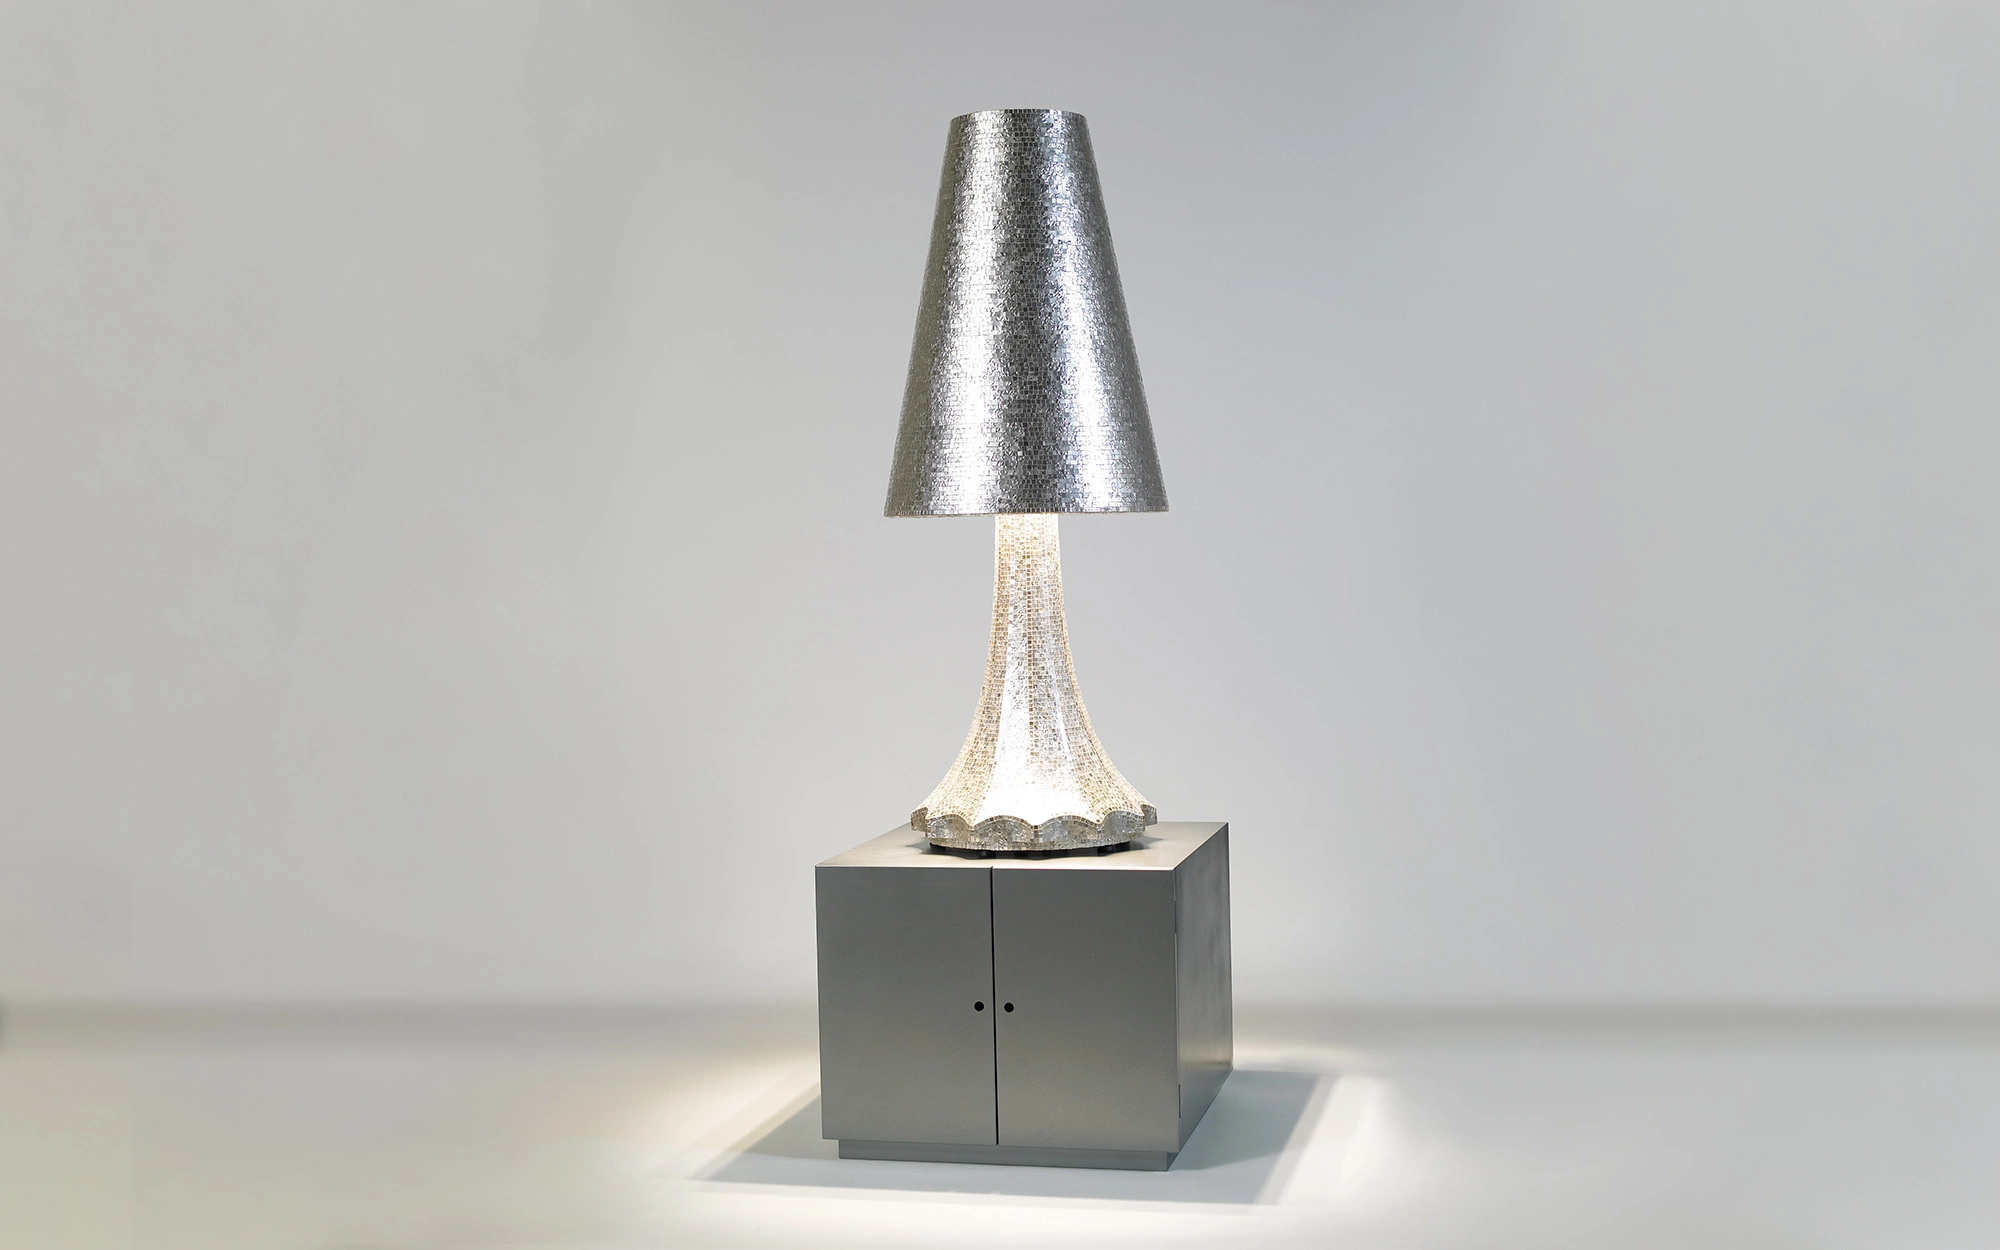 Lampada white gold - Alessandro Mendini - Sofa - Galerie kreo